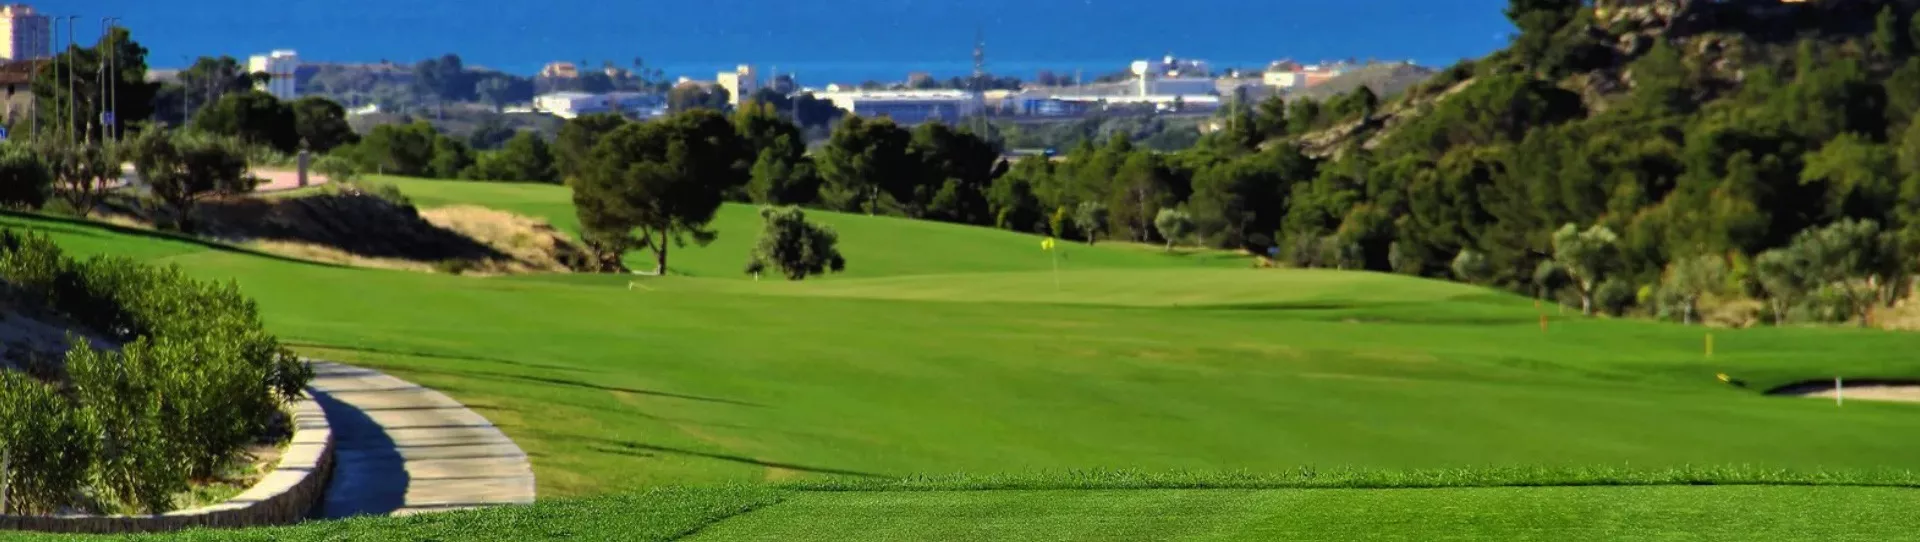 Spain golf courses - Puig Campana Golf - Photo 2